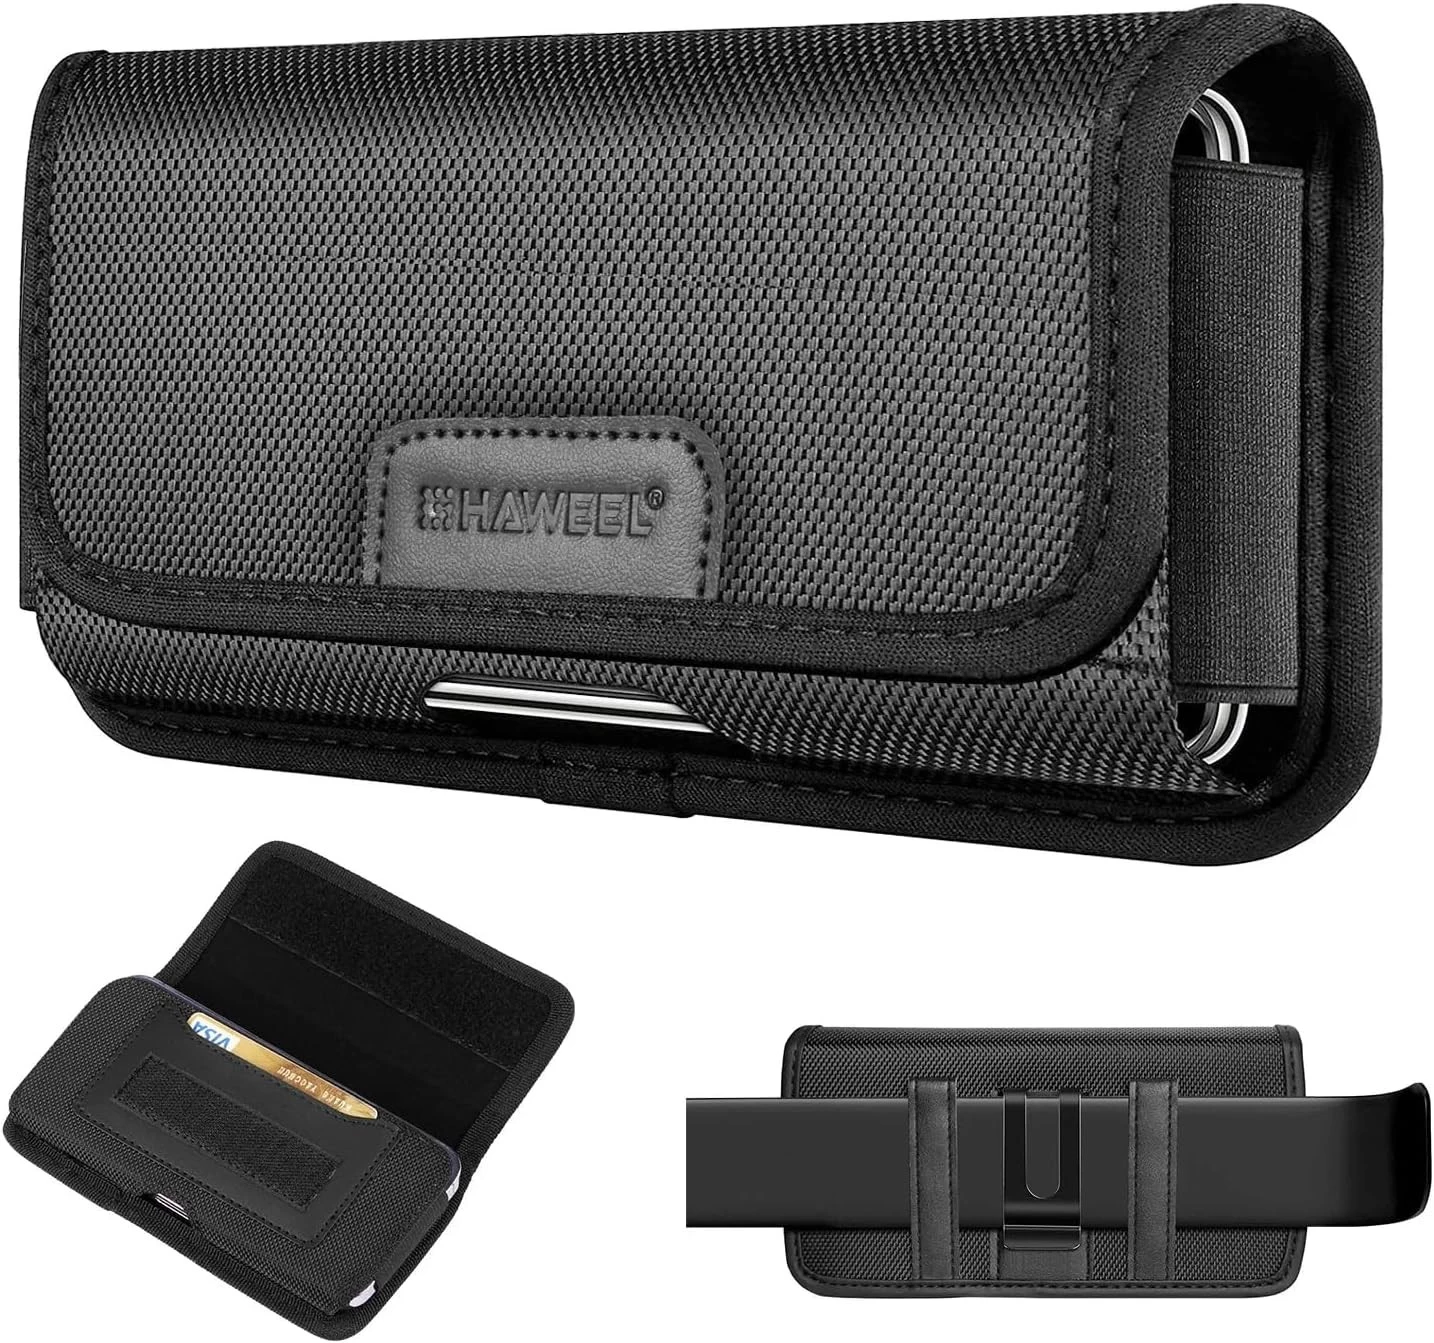 MySouq-Store Phone Holster Case Nylon Cell Phone Belt Clip Pouch Carrying Case Waist Bag - Horizontal (XL) 15 * 75 * 15 CM - B0CY7MD23C